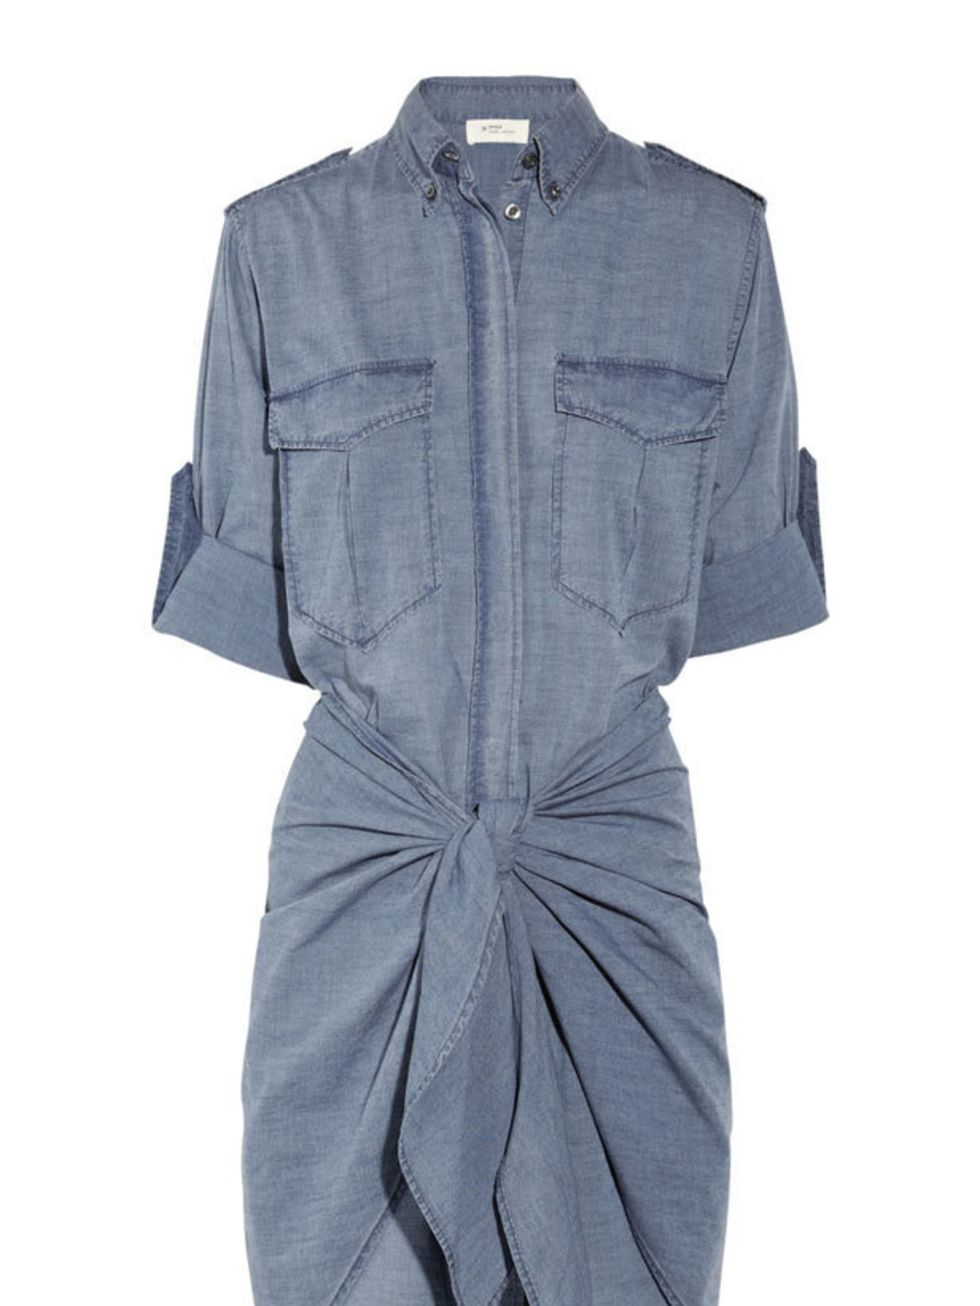 <p>Étoile Isabel Marant chambray shirt dress, £245, at <a href="http://www.net-a-porter.com/product/164279">Net-a-Porter</a></p>